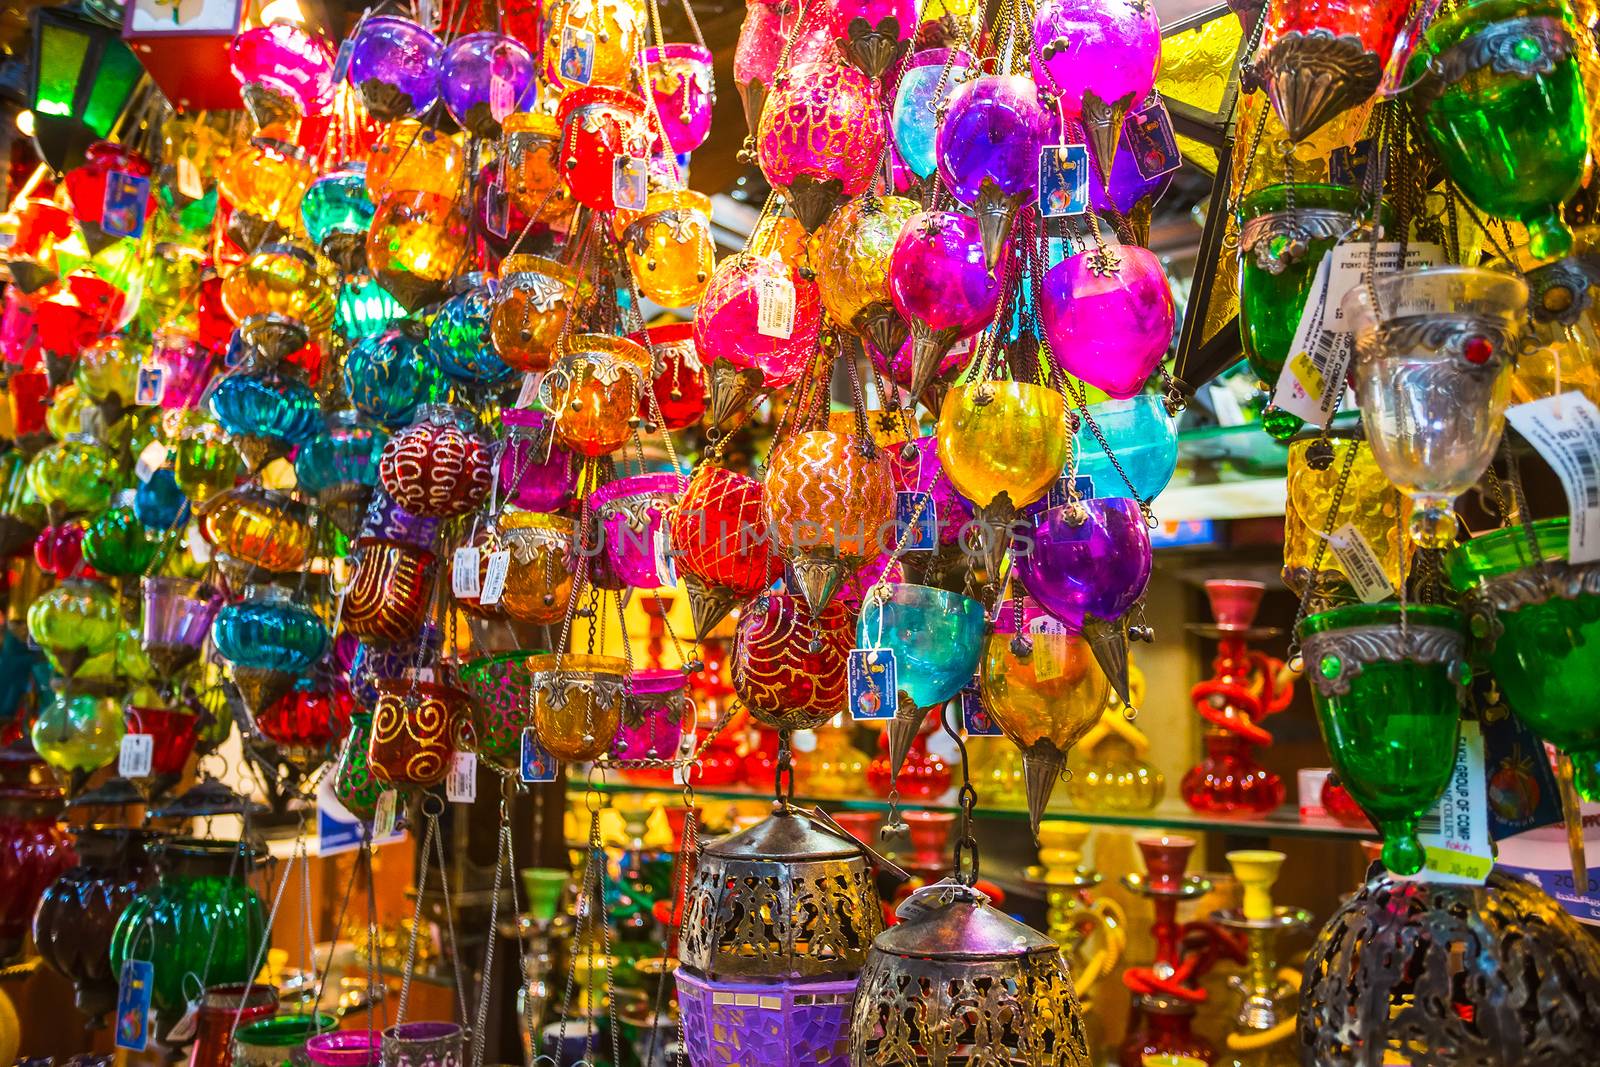 Arab street lanterns in the city of Dubai in the United Arab Emirates